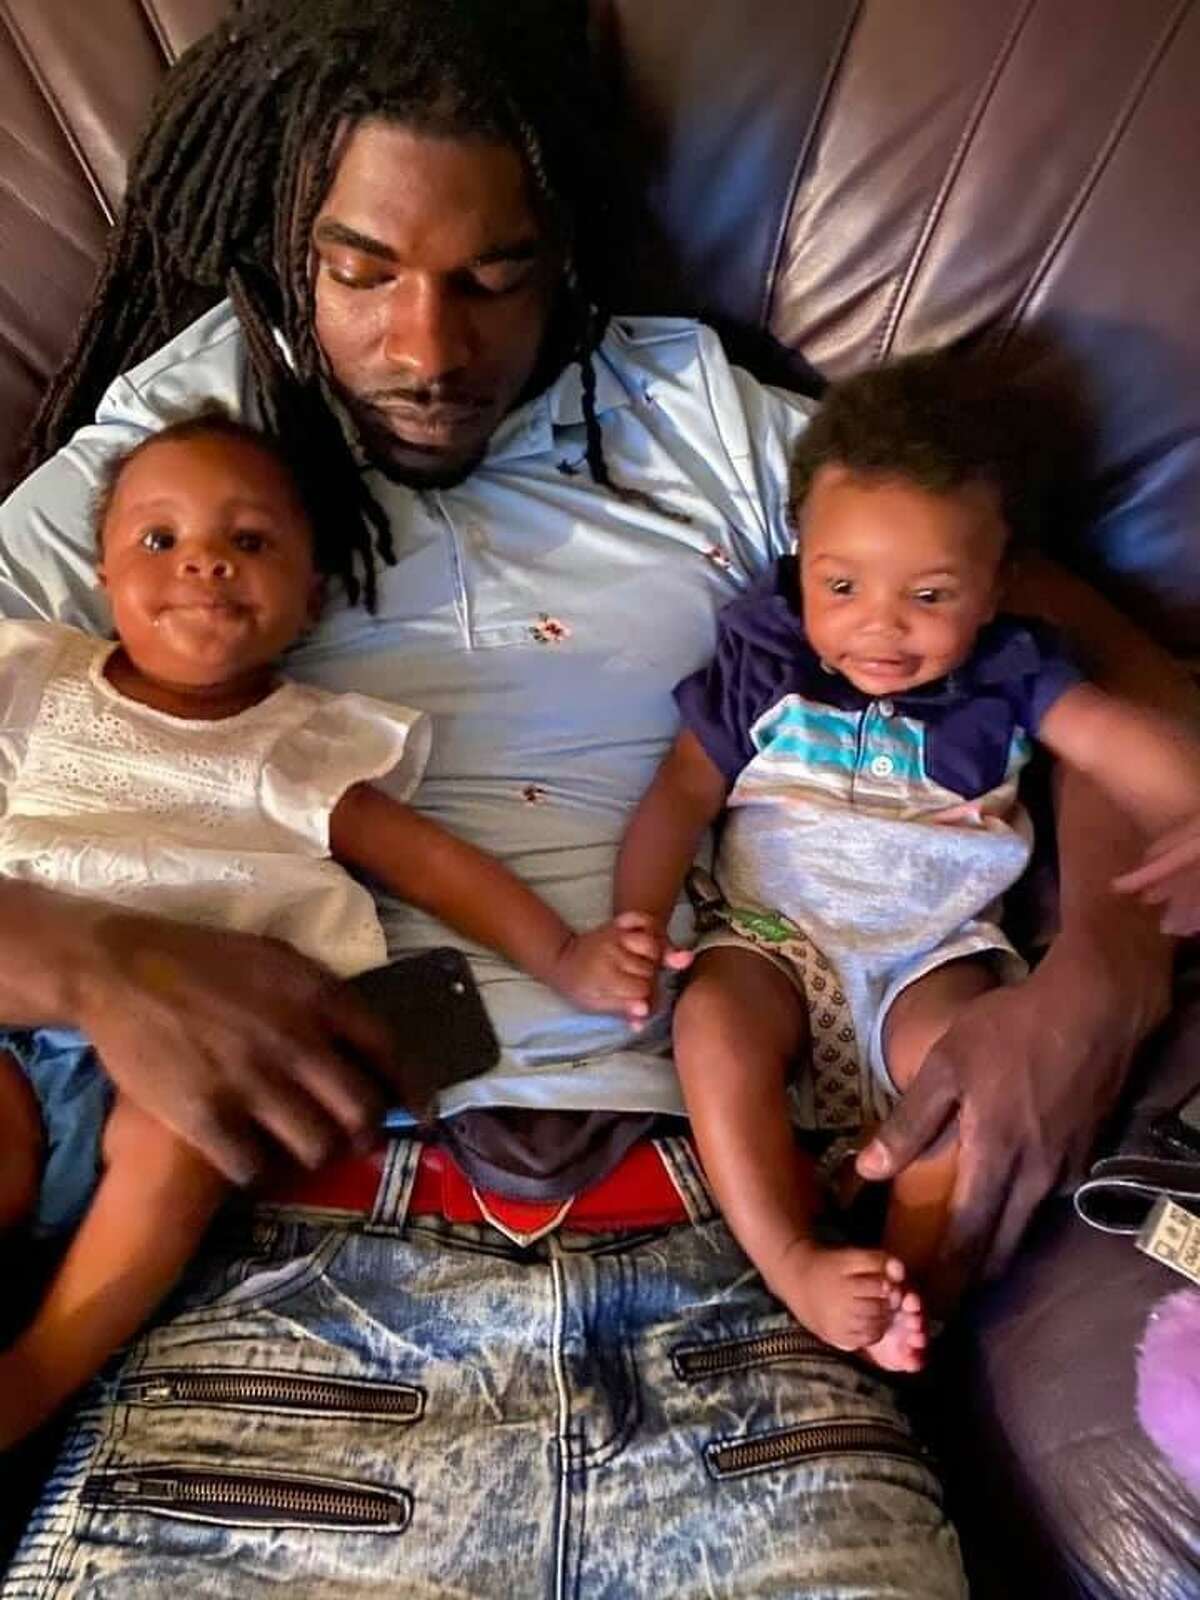 Melvin Stanley, with his children Mi’Ari and Ma’Kari.